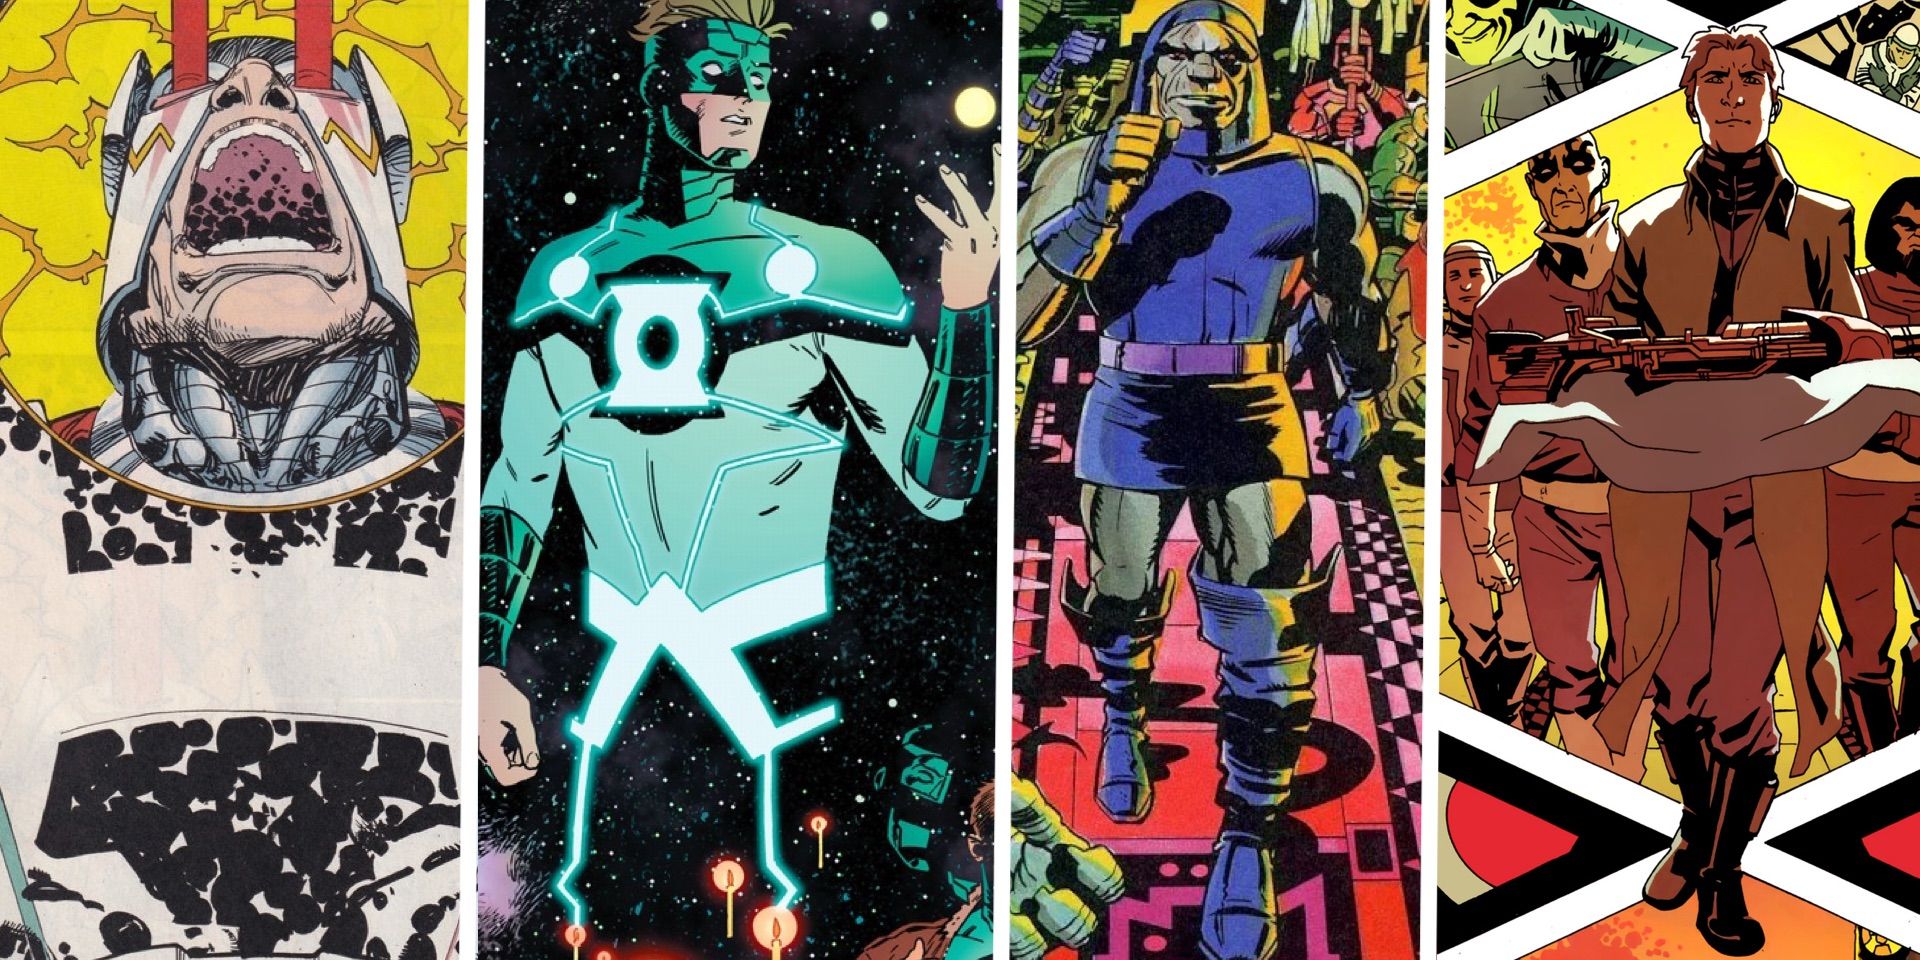 Orion, Green Lantern Hal Jordan, Darkseid, and Lex Luthor